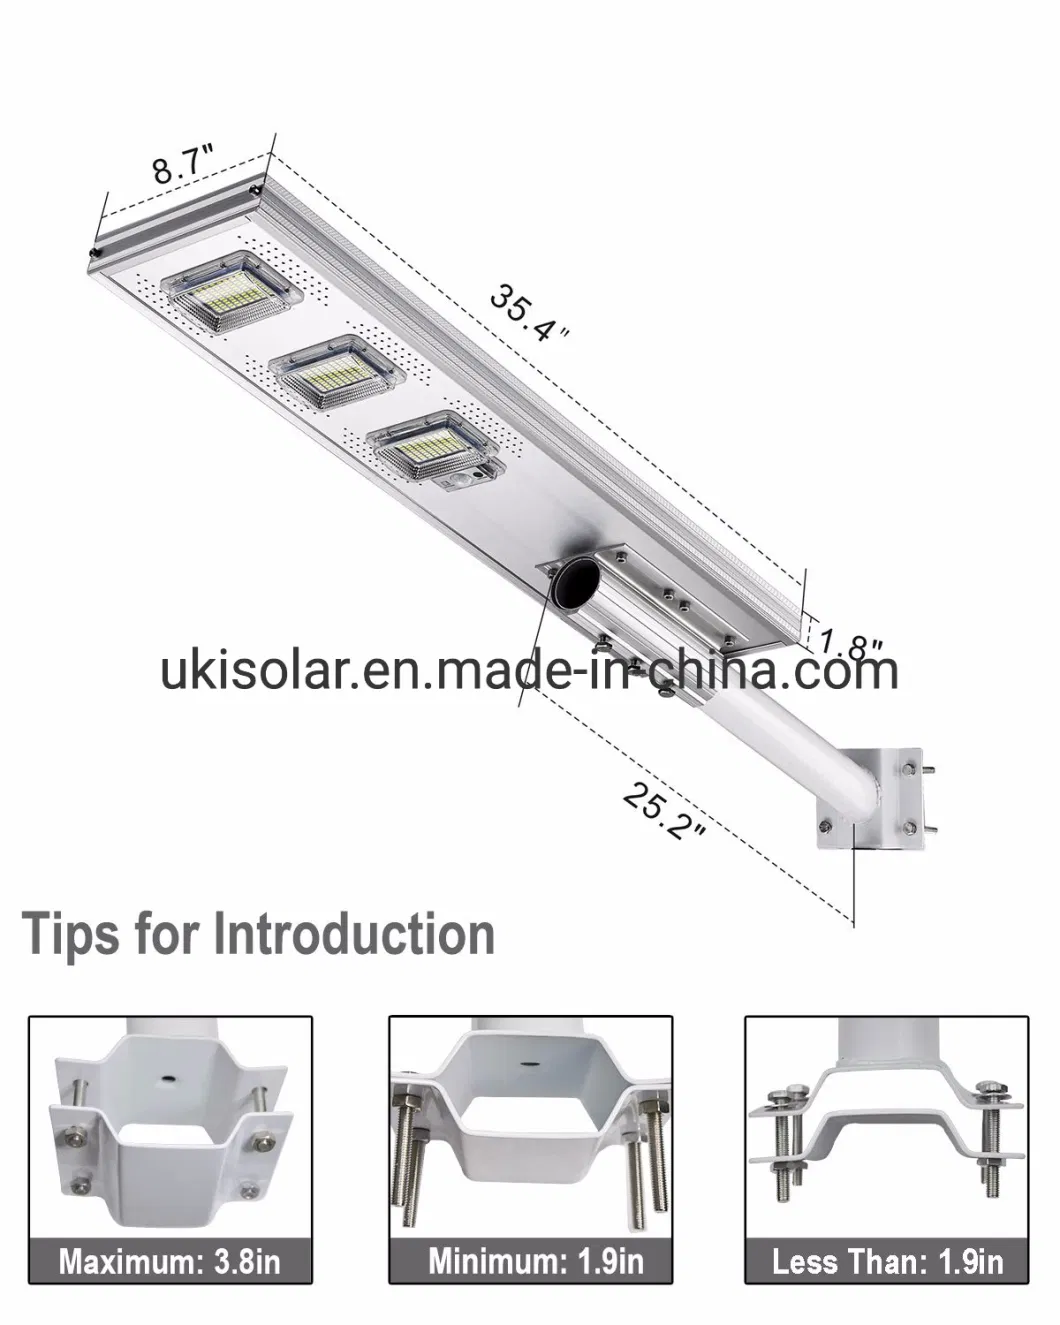 Ukisolar High Power Outdoor Waterproof Motion Sensor All in One LED Module Small Garden Solar Street Light